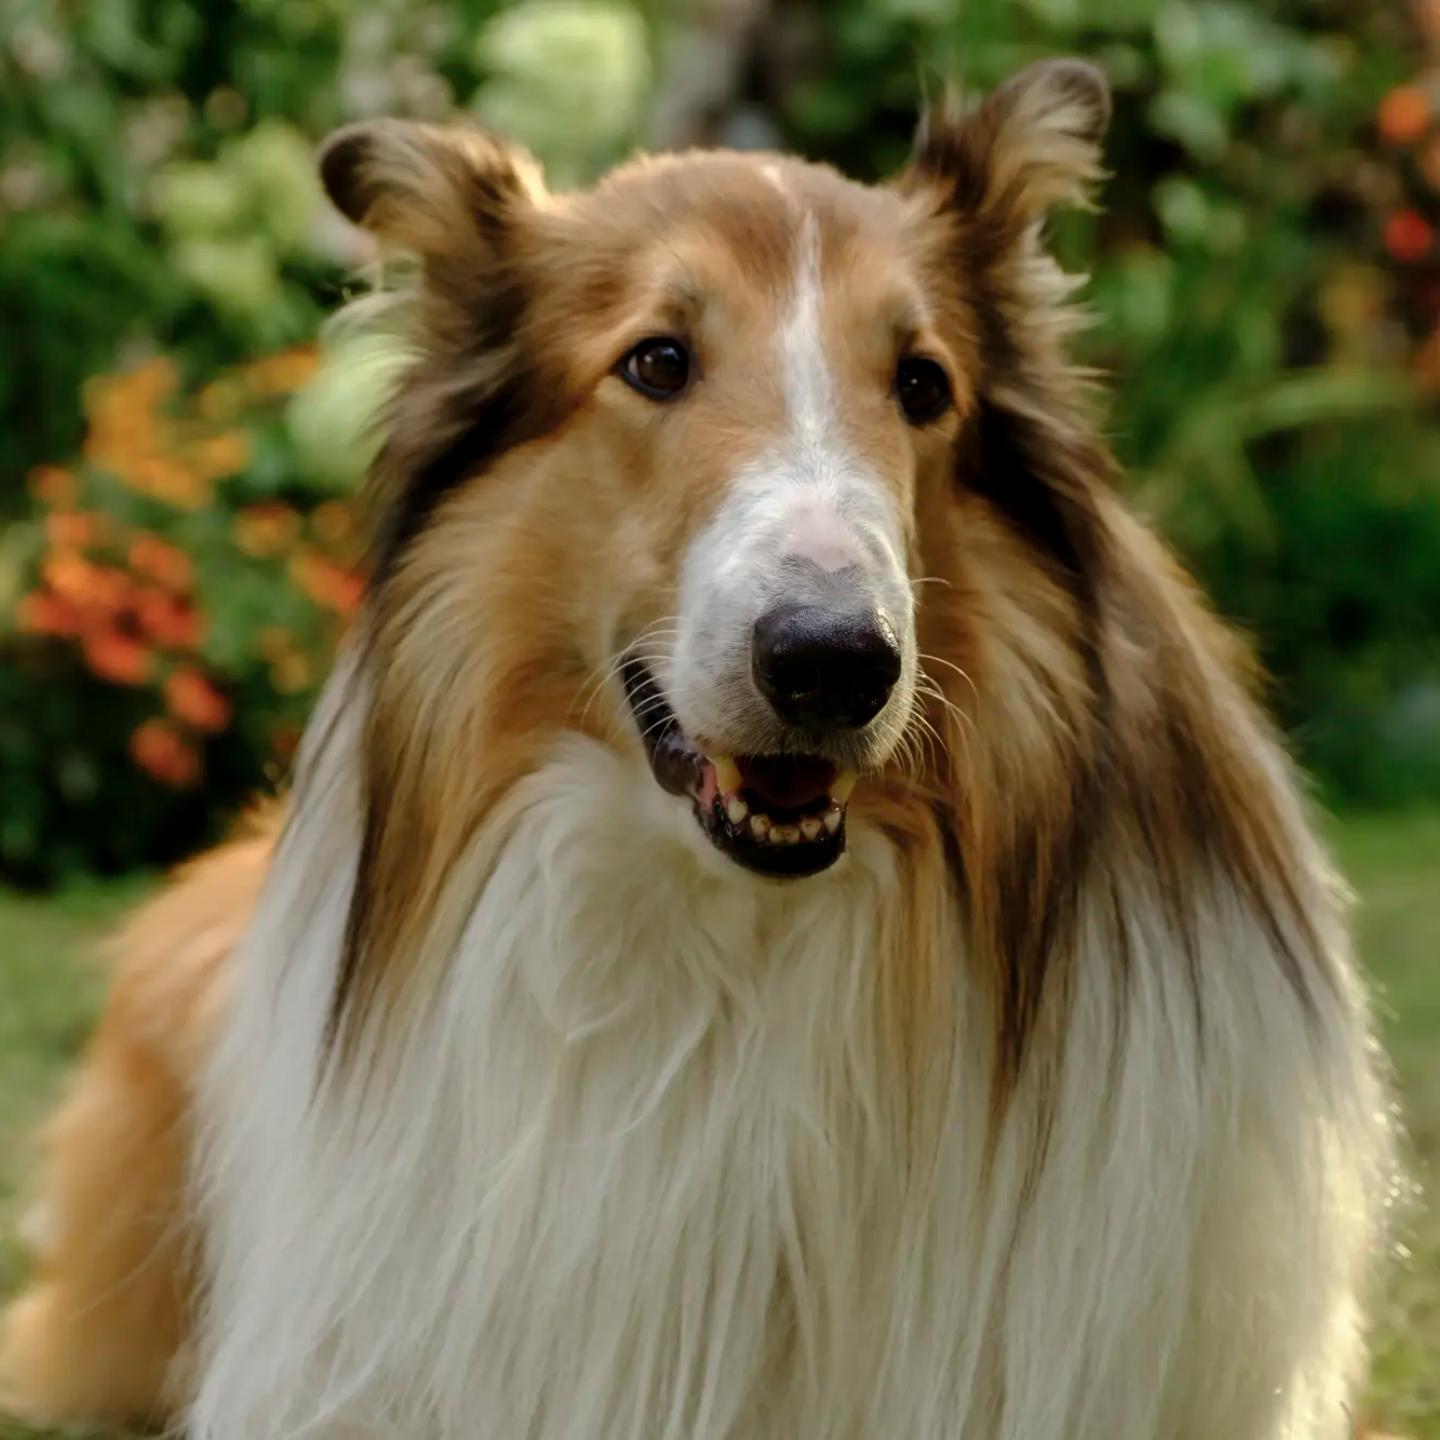 a dog with a fluffy fur